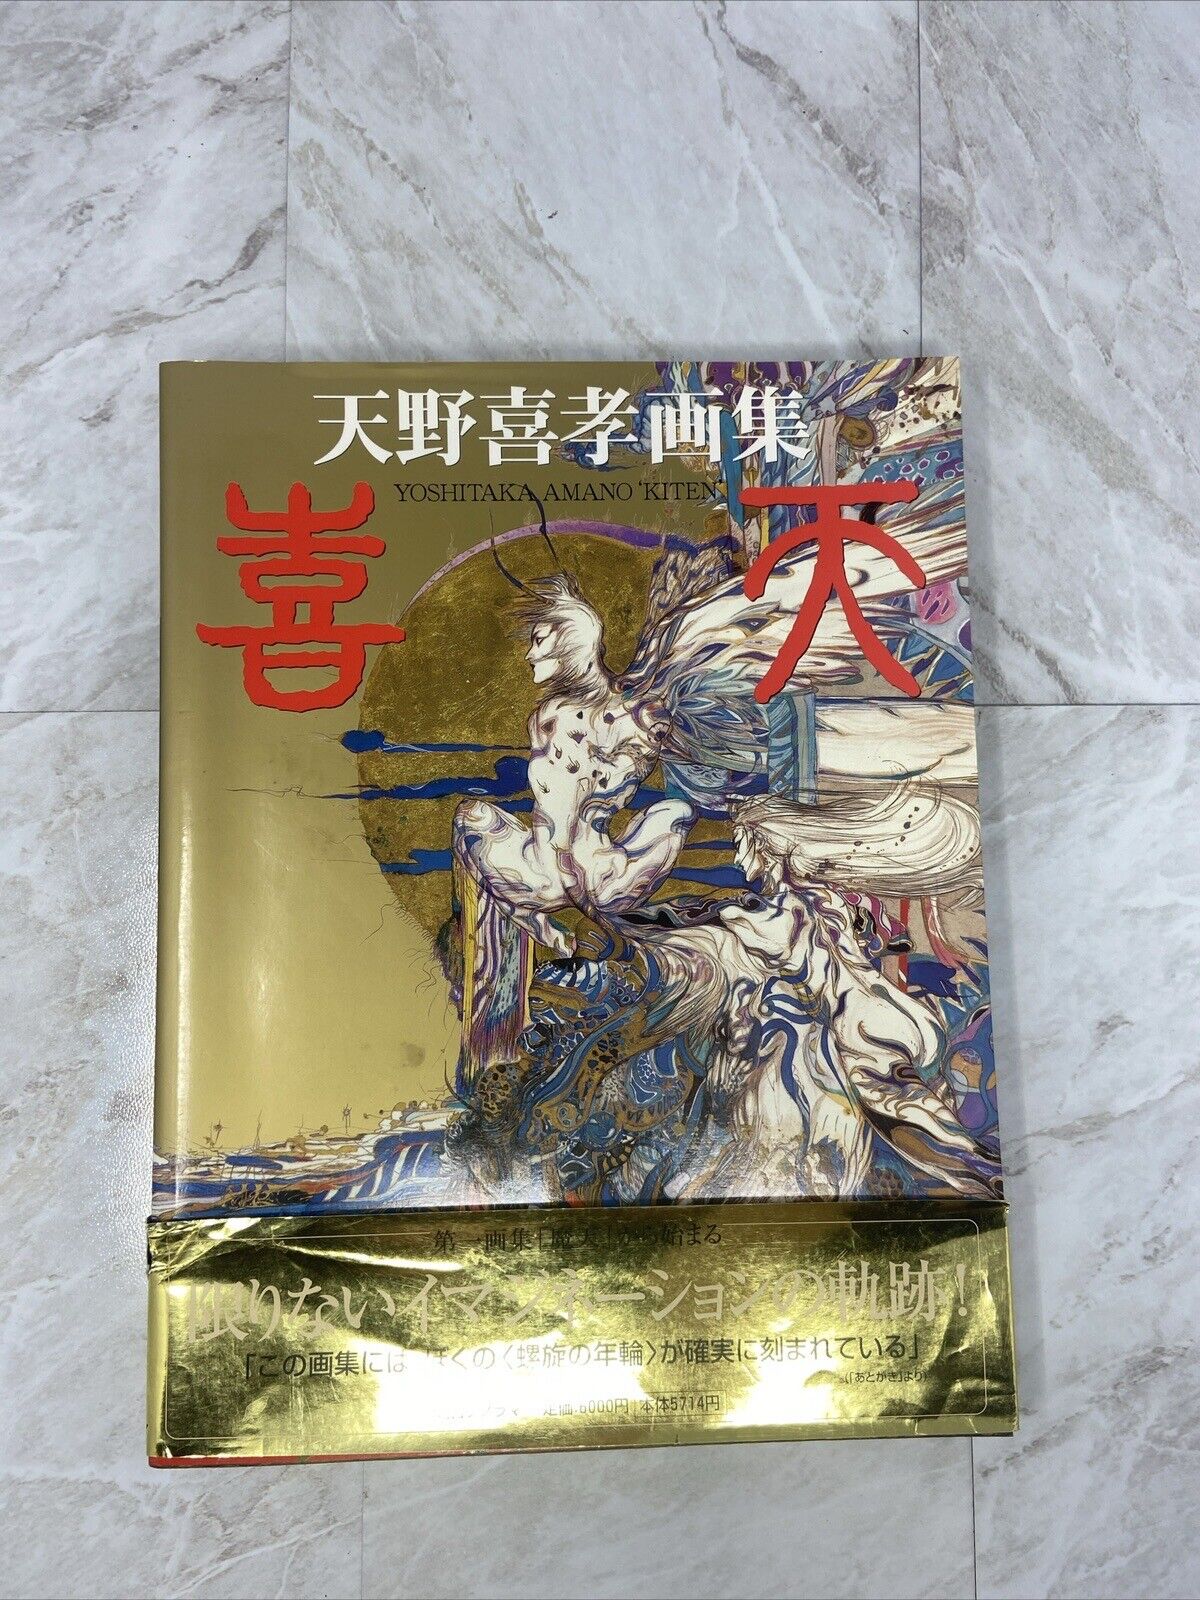 Yoshitaka Amano art book Kiten first edition with obi from Japan #3127